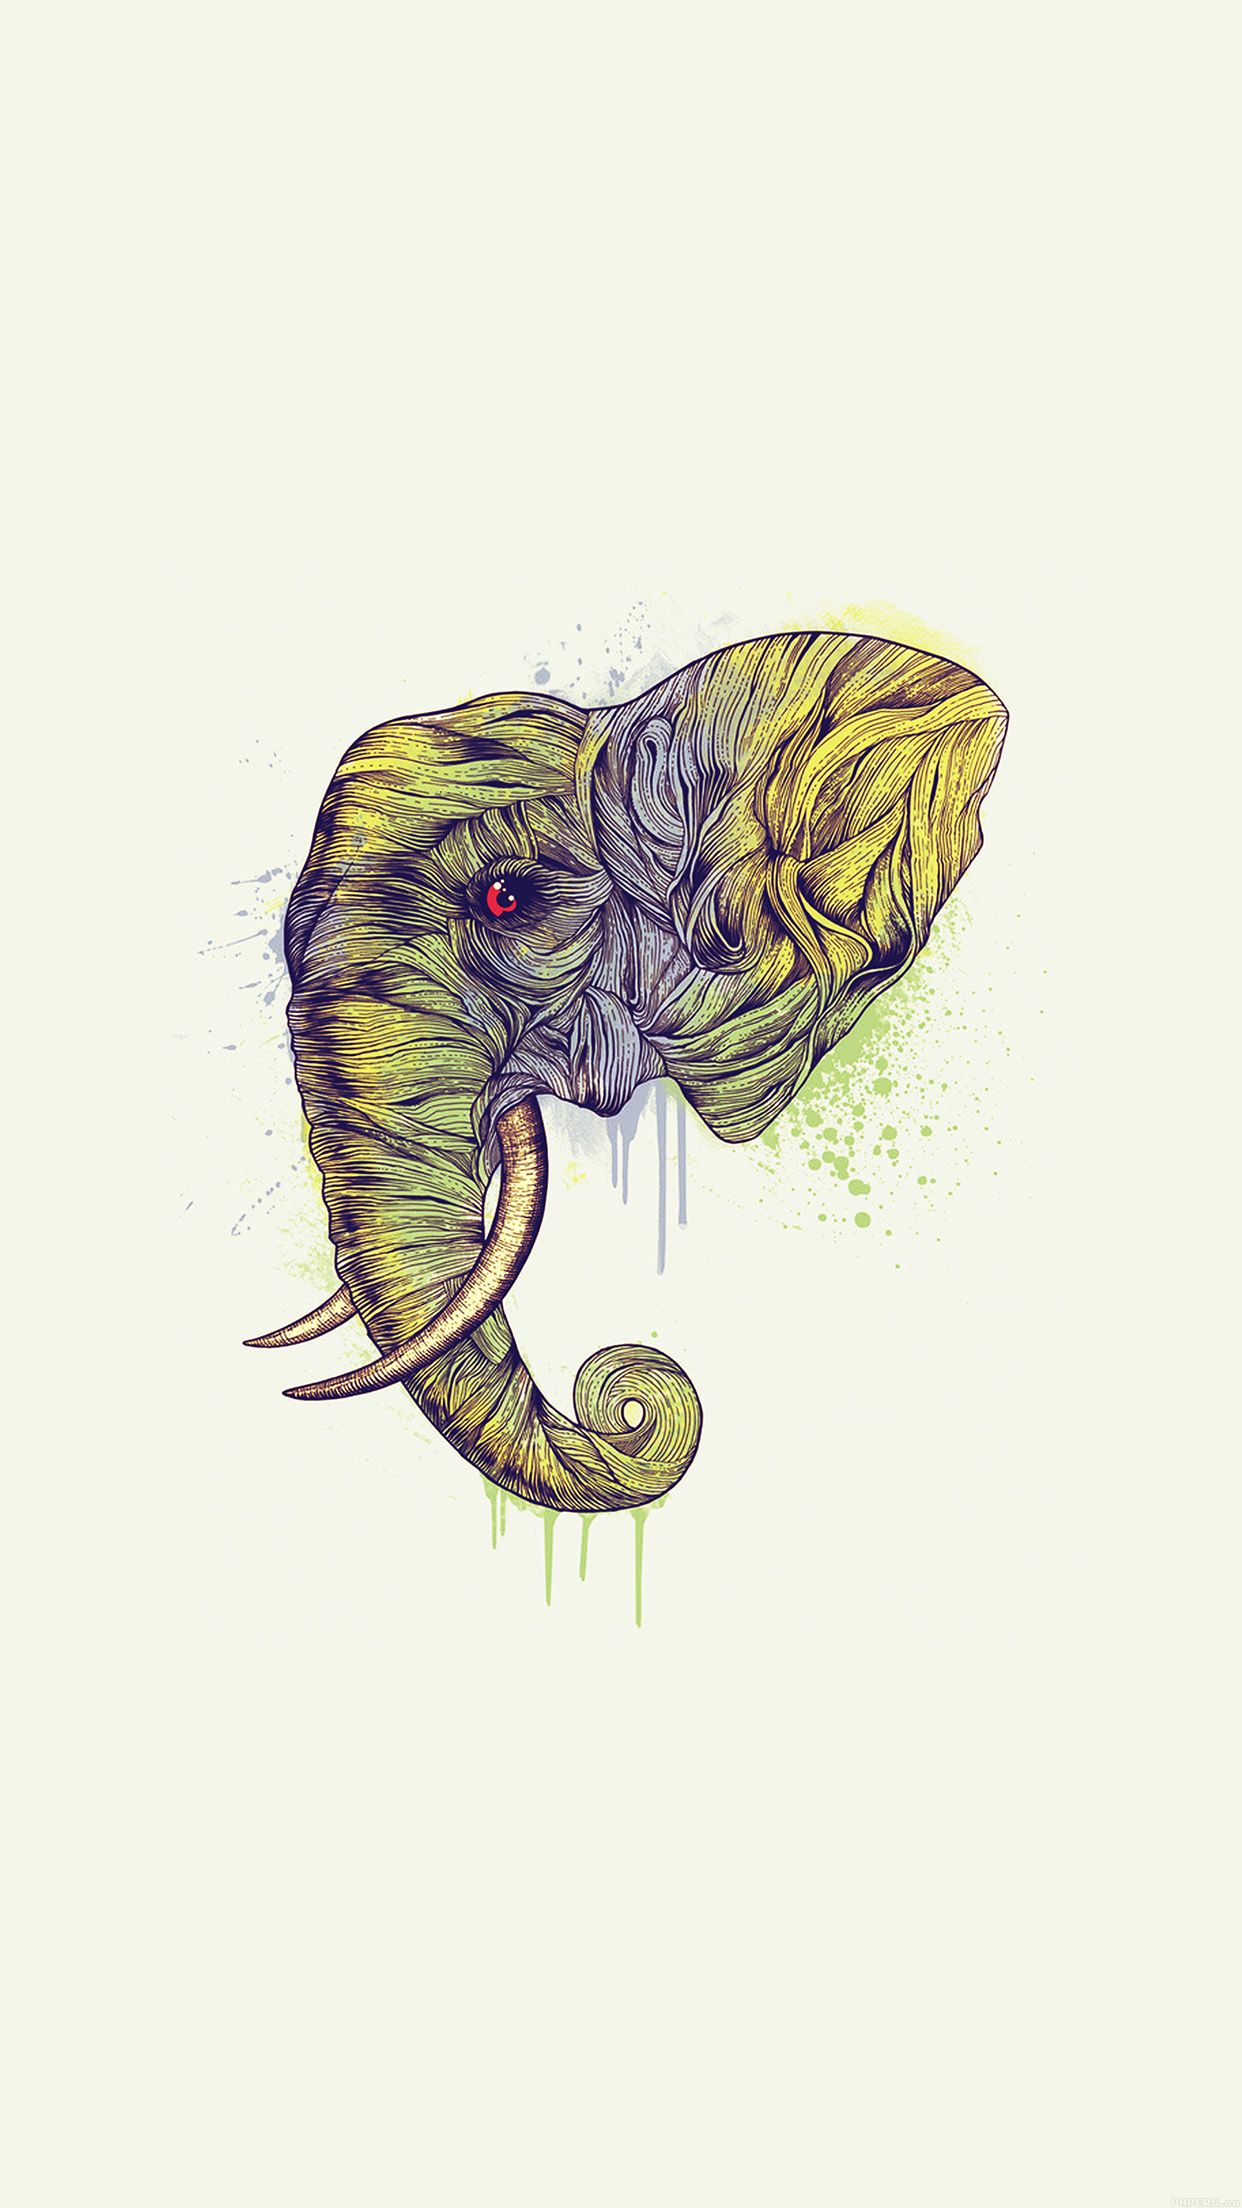 iPhone X wallpaper. elephant art yellow illust drawing animal